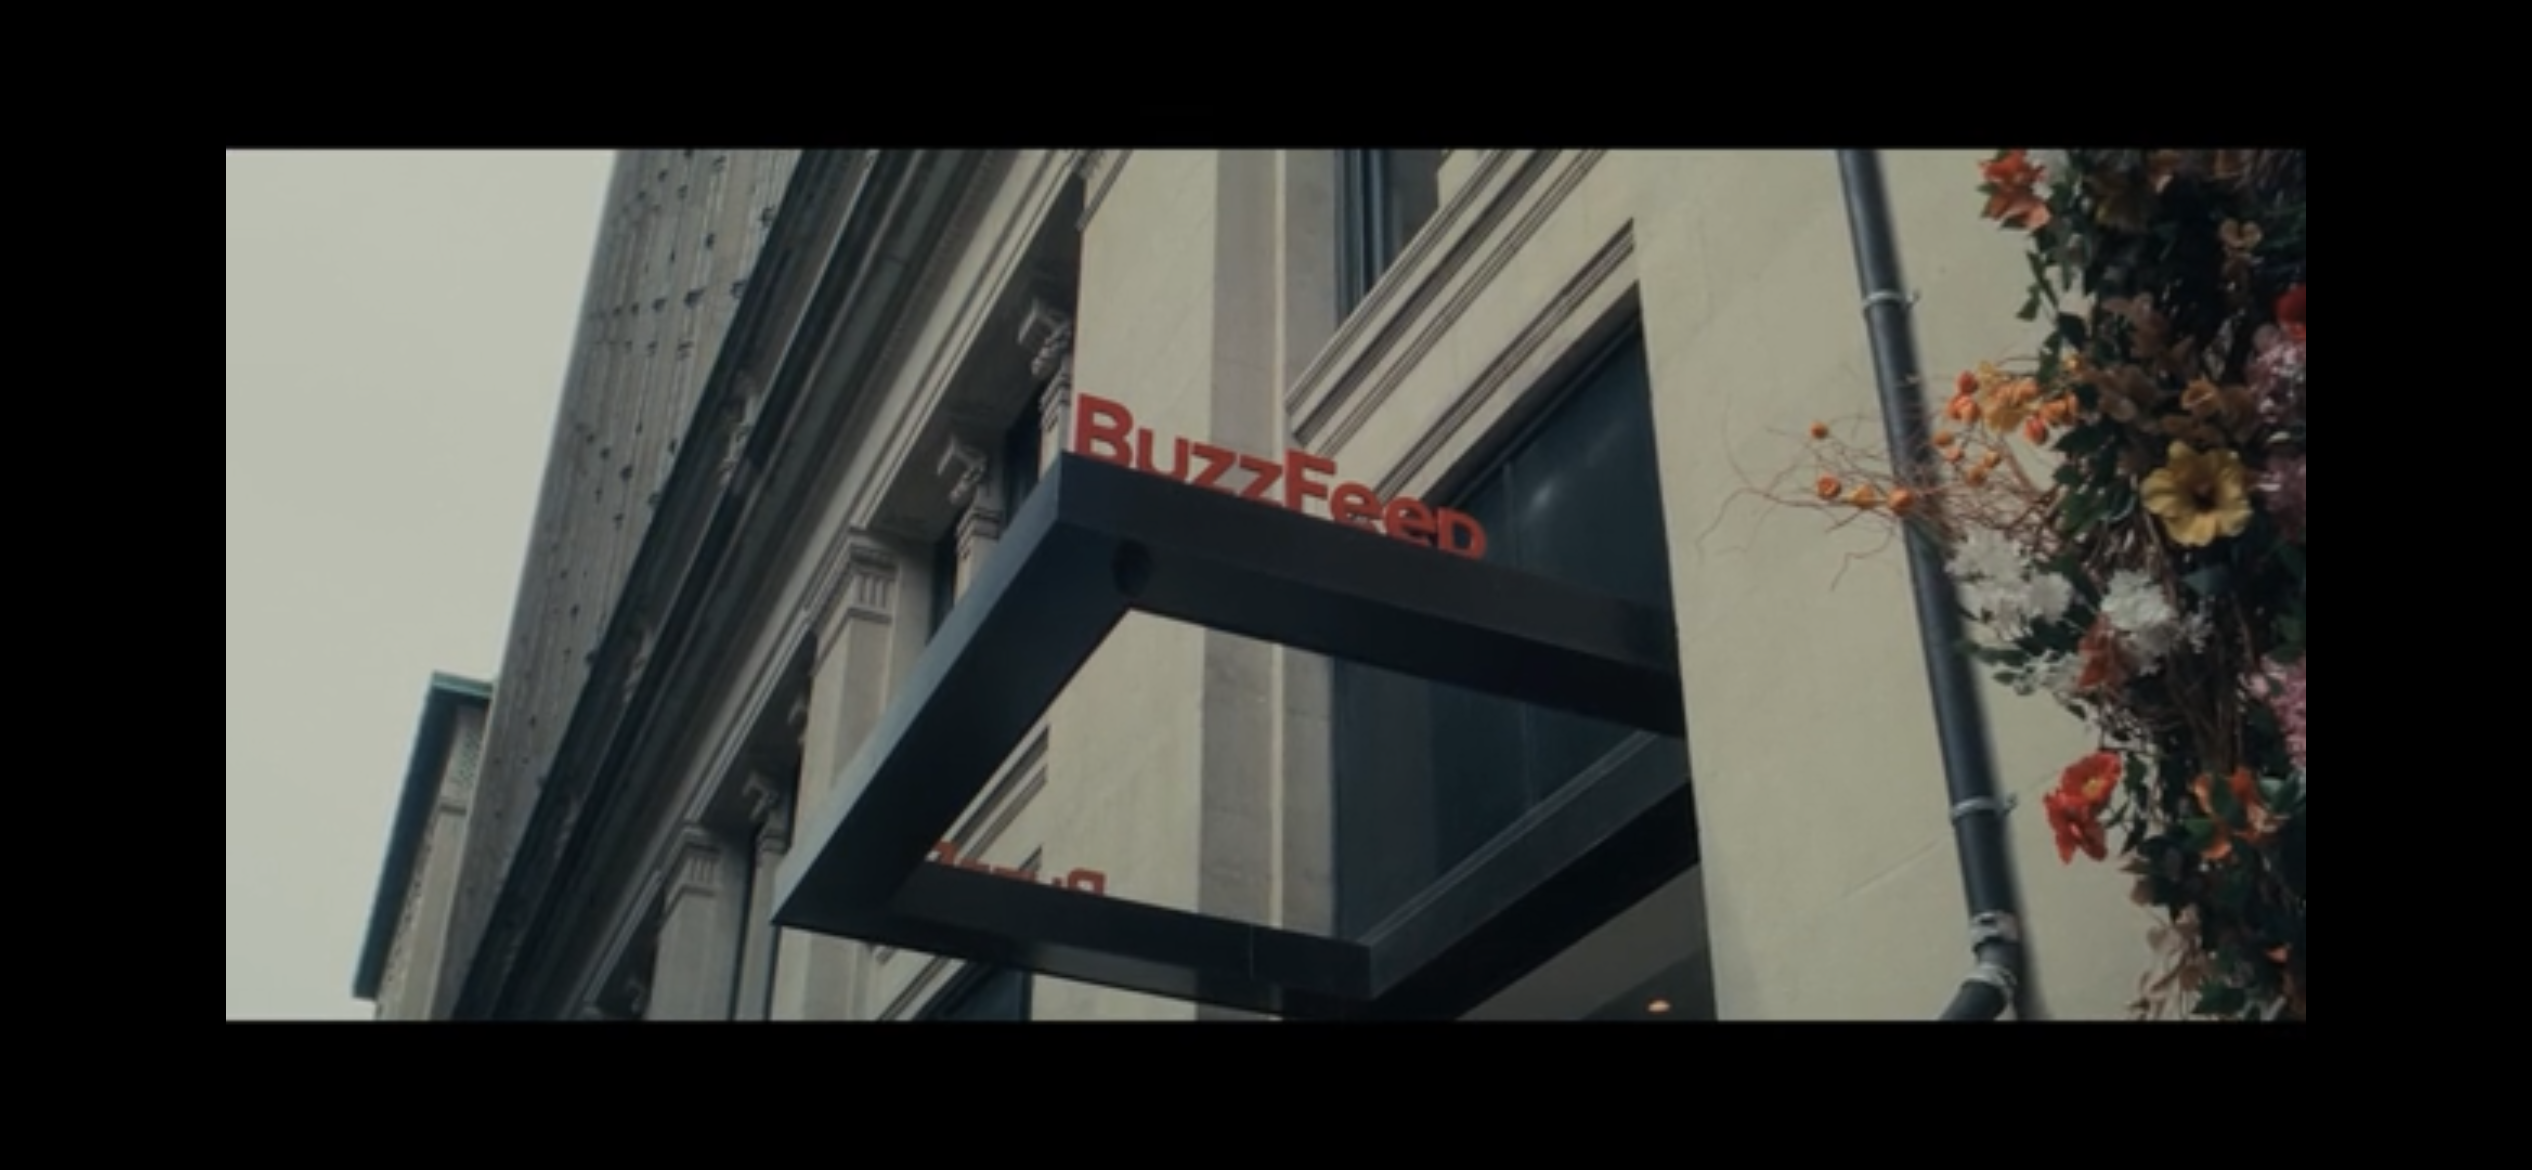 buzzfeed office